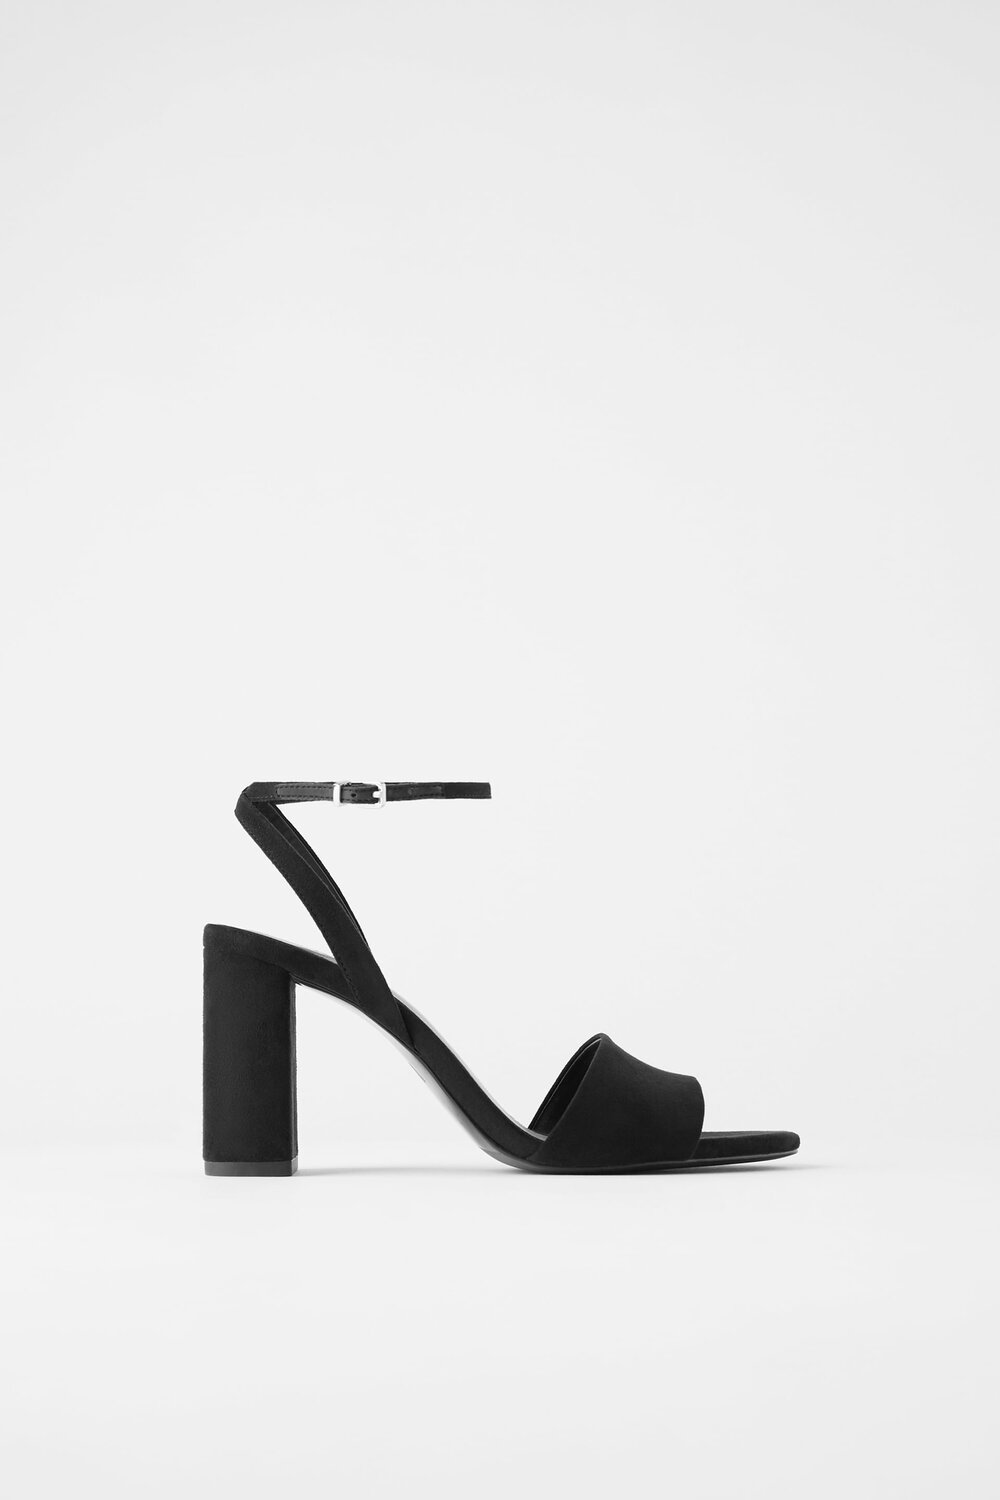 strottenhoofd formeel wiel Zara Block Heel Ankle Strap Sandals in Black — UFO No More